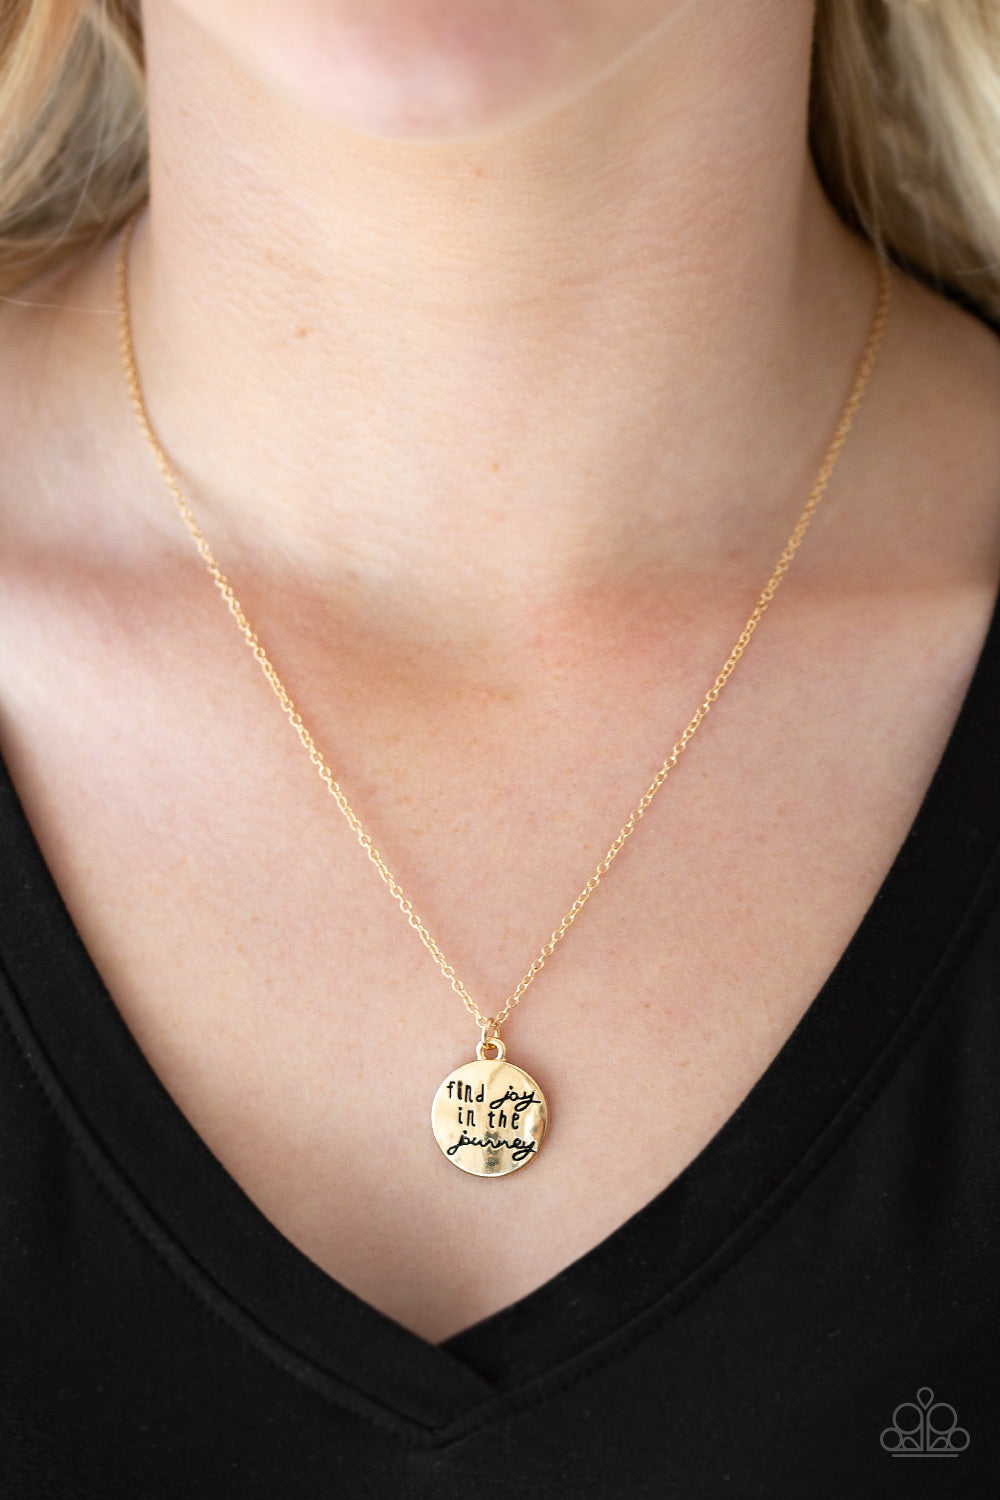 Find Joy - Gold Necklace - Paparazzi Accessories